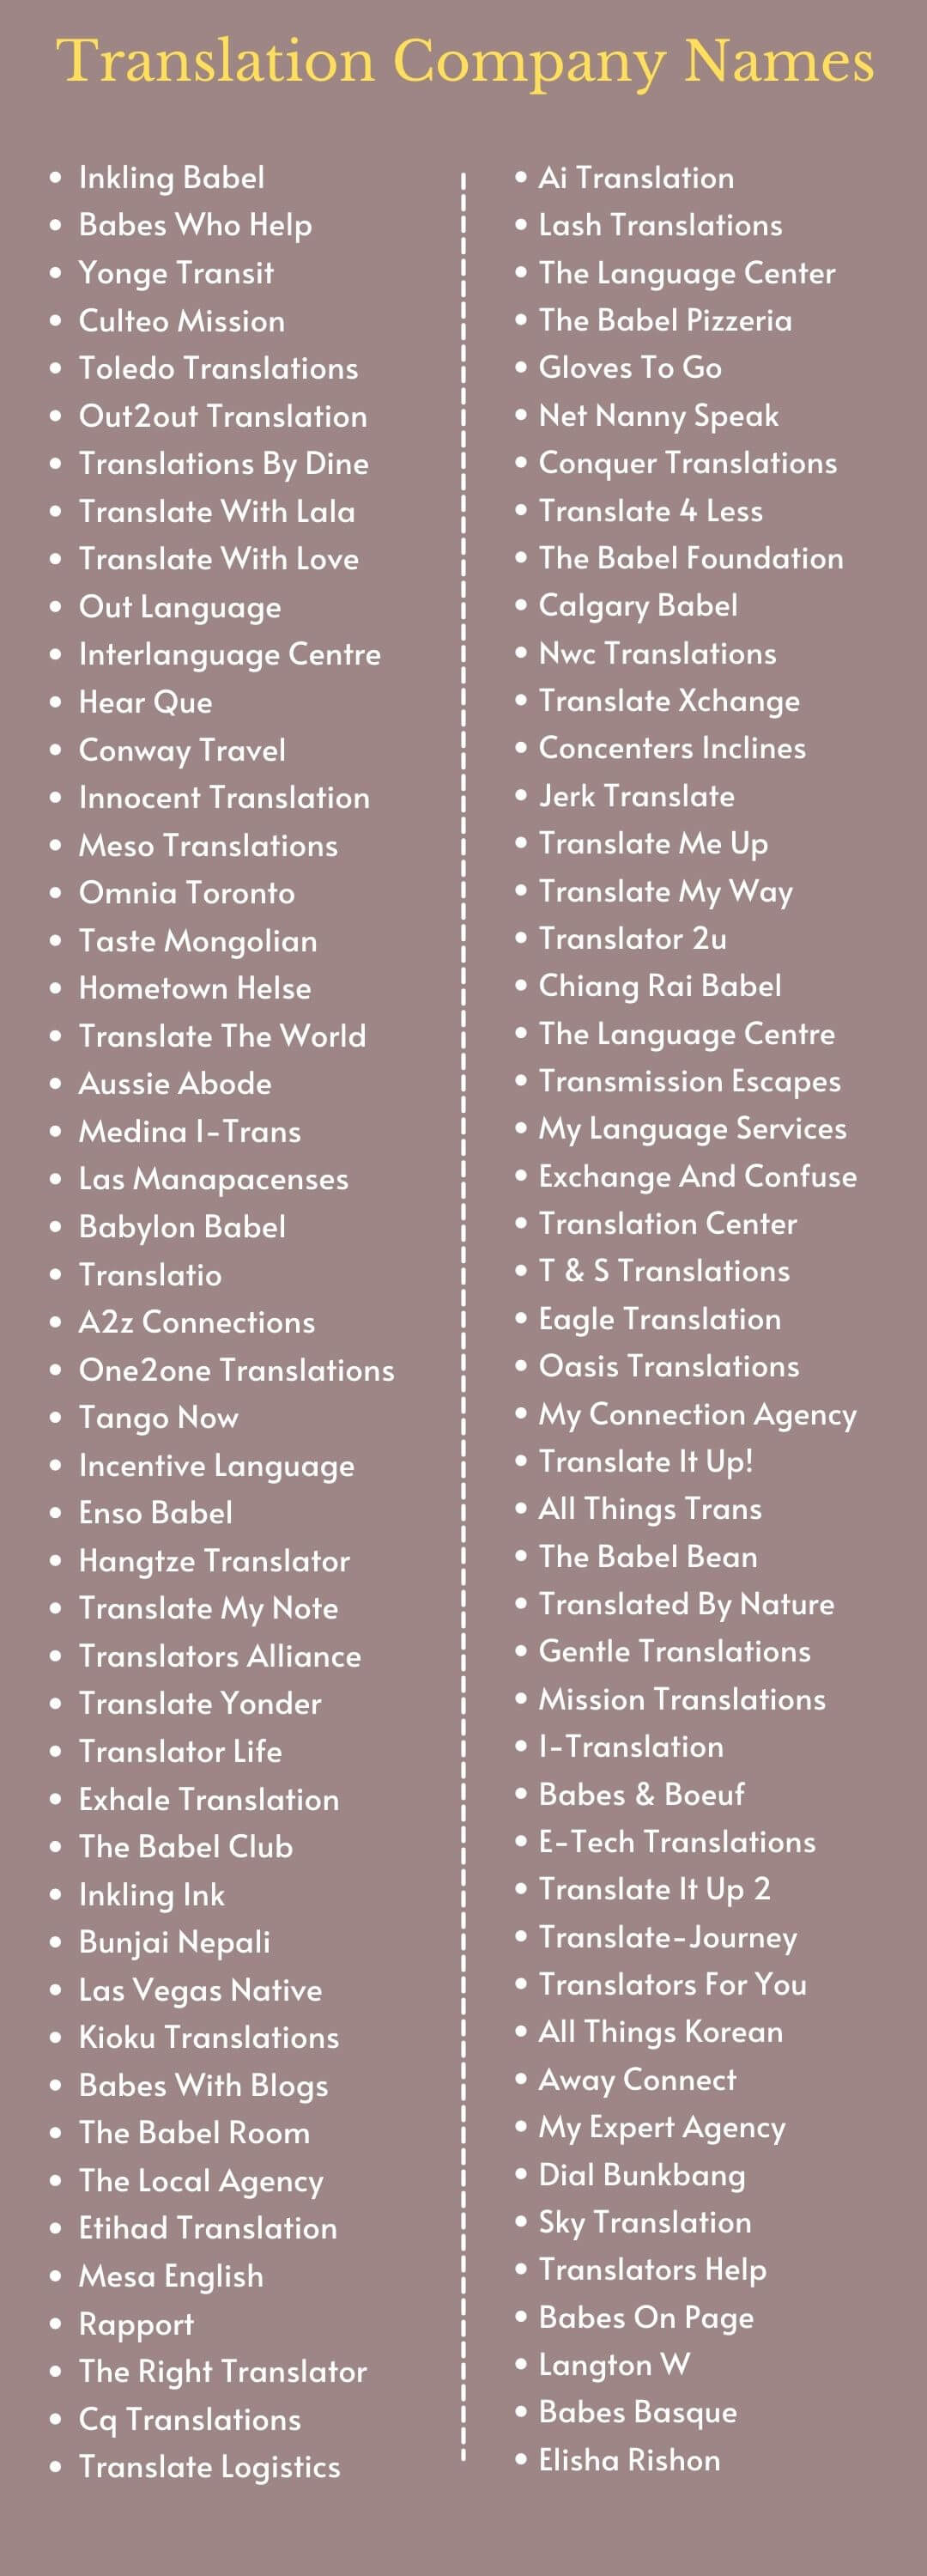 Translation Company Names: Infographic